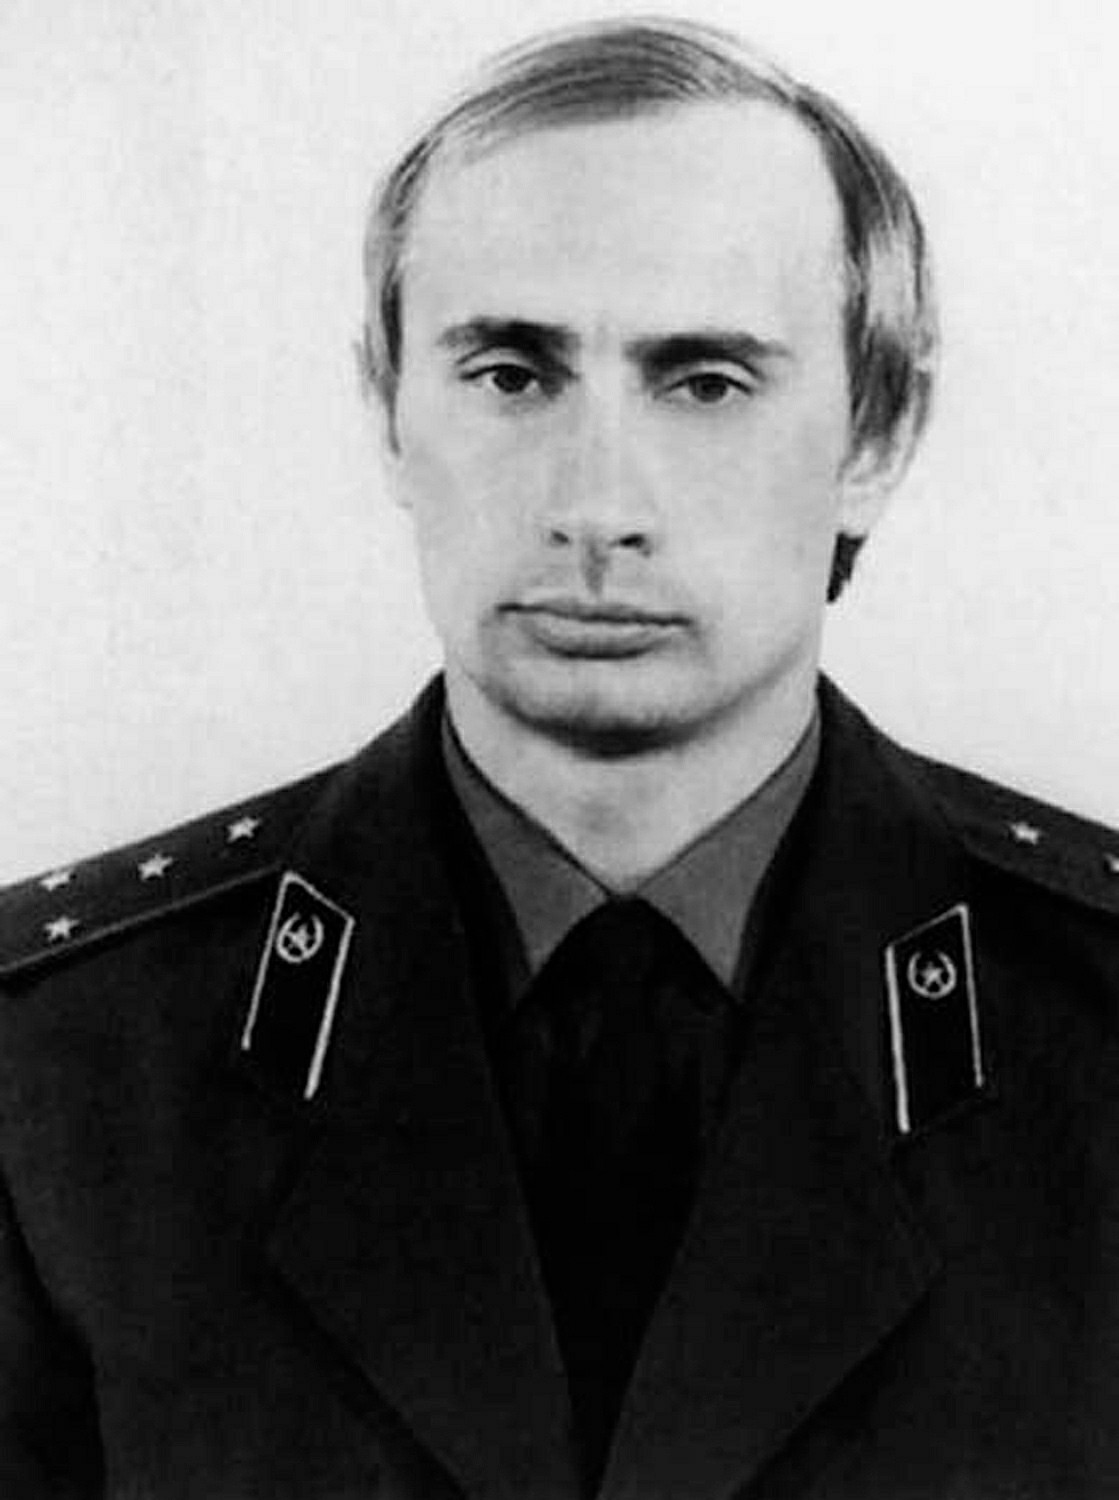 Oko 1980. godine, Rusija. Mladi Vladimir Putin u uniformi KGB-a.

